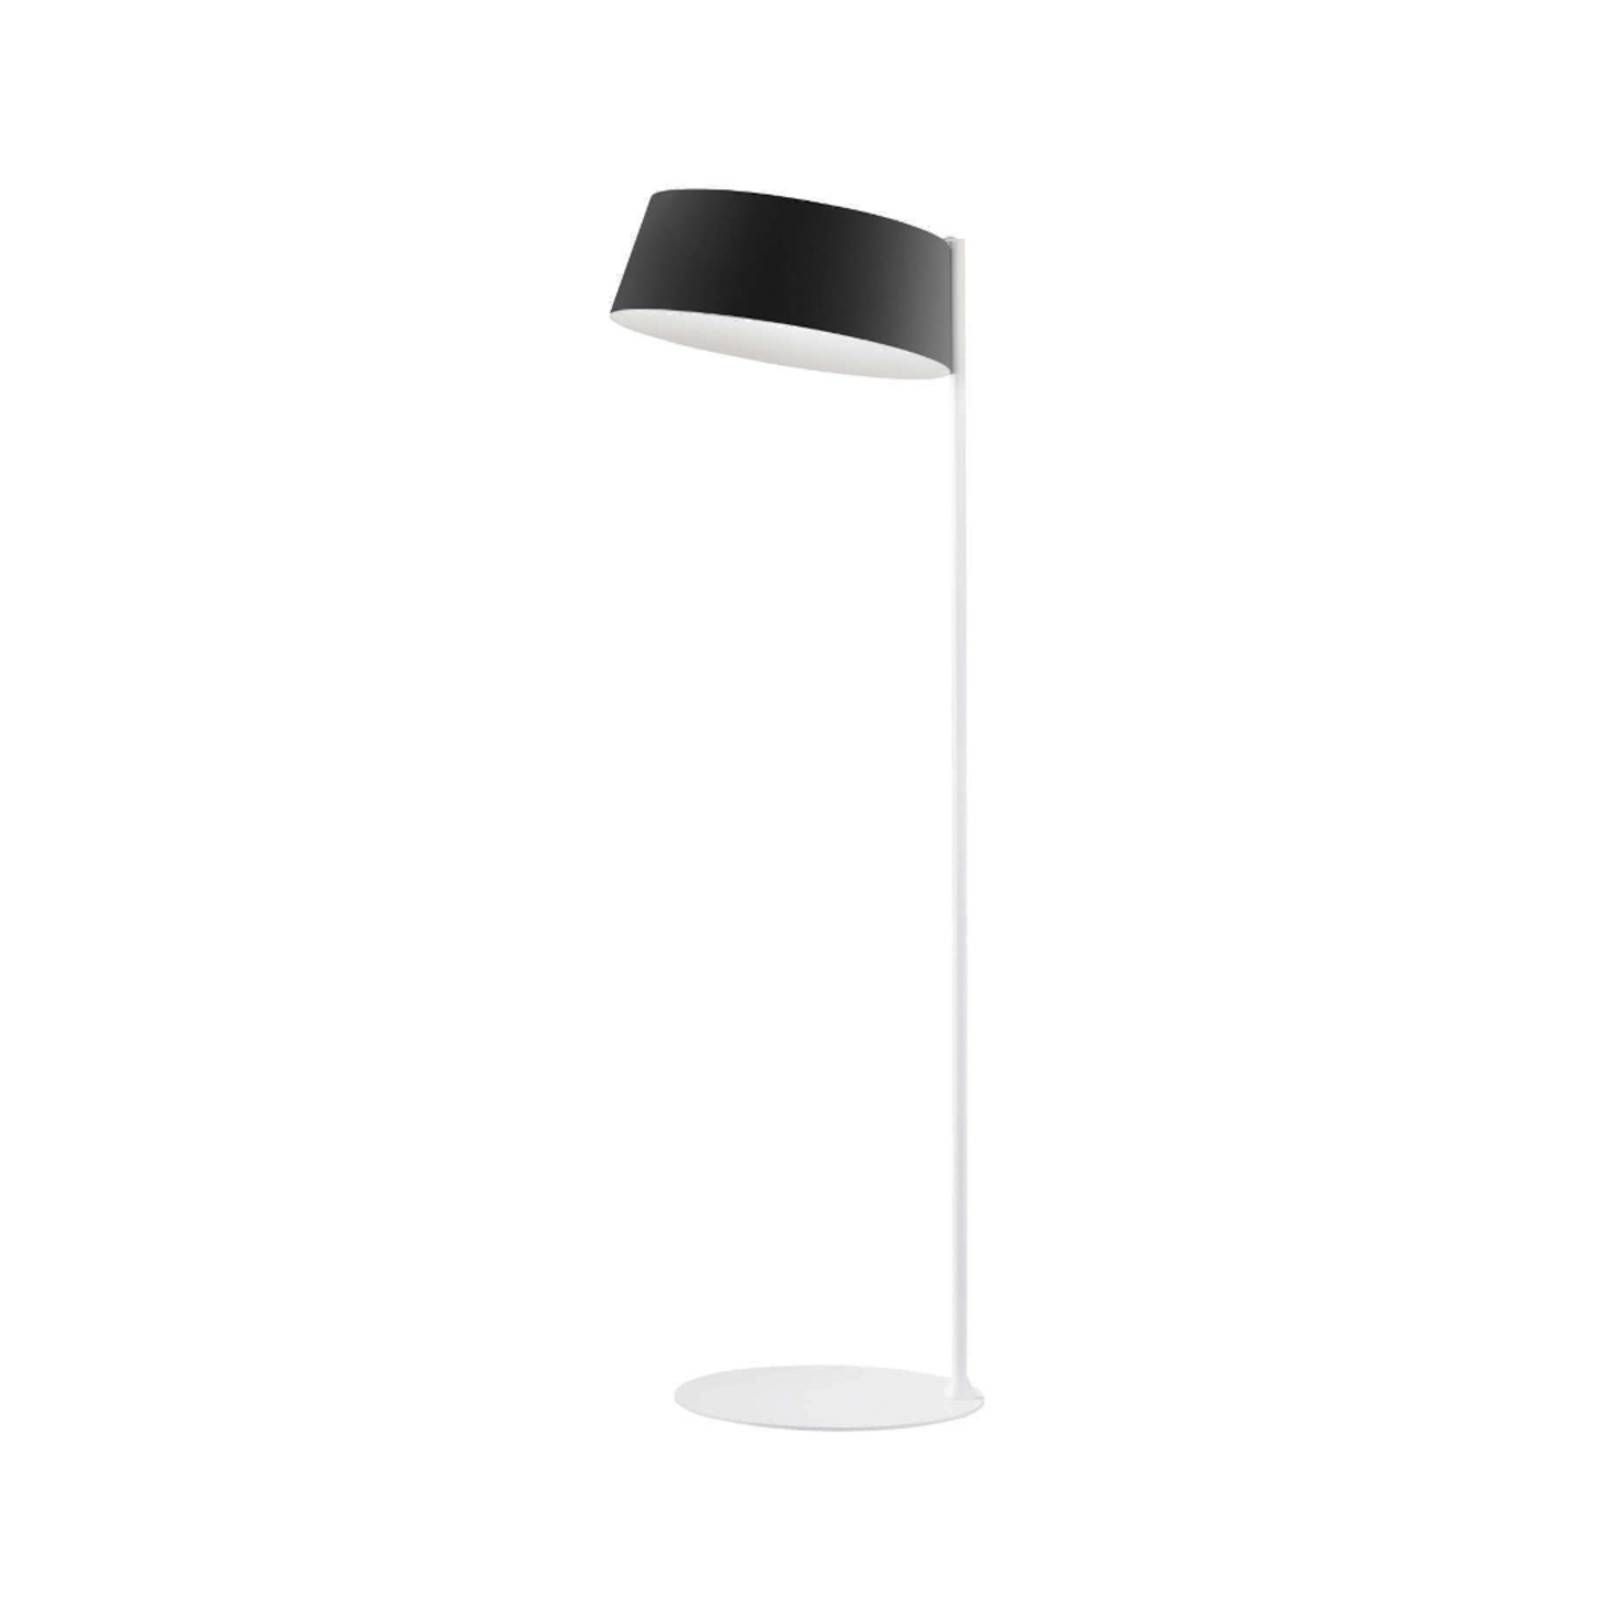 Stilnovo Oxygen FL2 stojacia LED lampa, čierna, Obývacia izba / jedáleň, kov, plast, 31W, K: 194.2cm